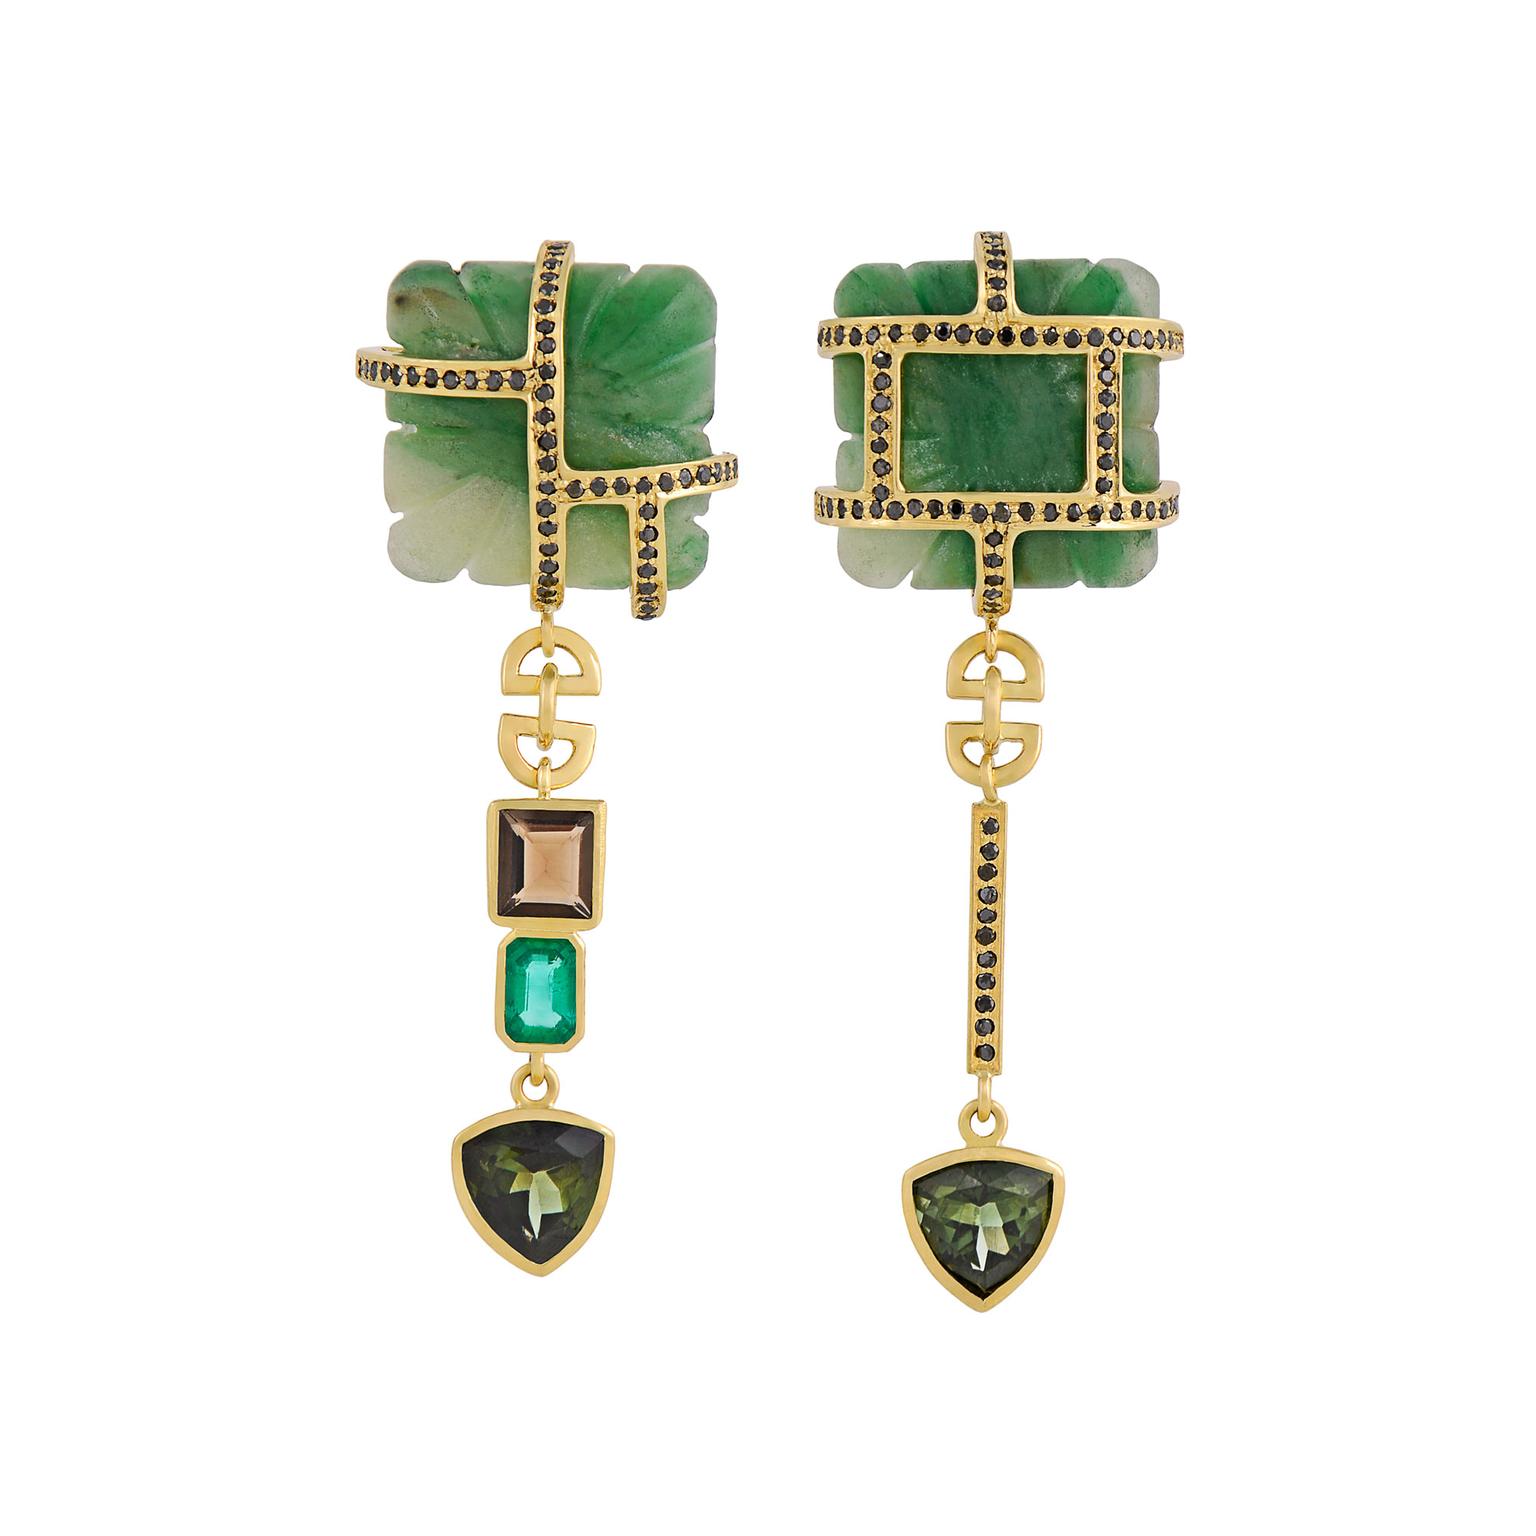 Tessa Packard carved aventurine and emerald earrings